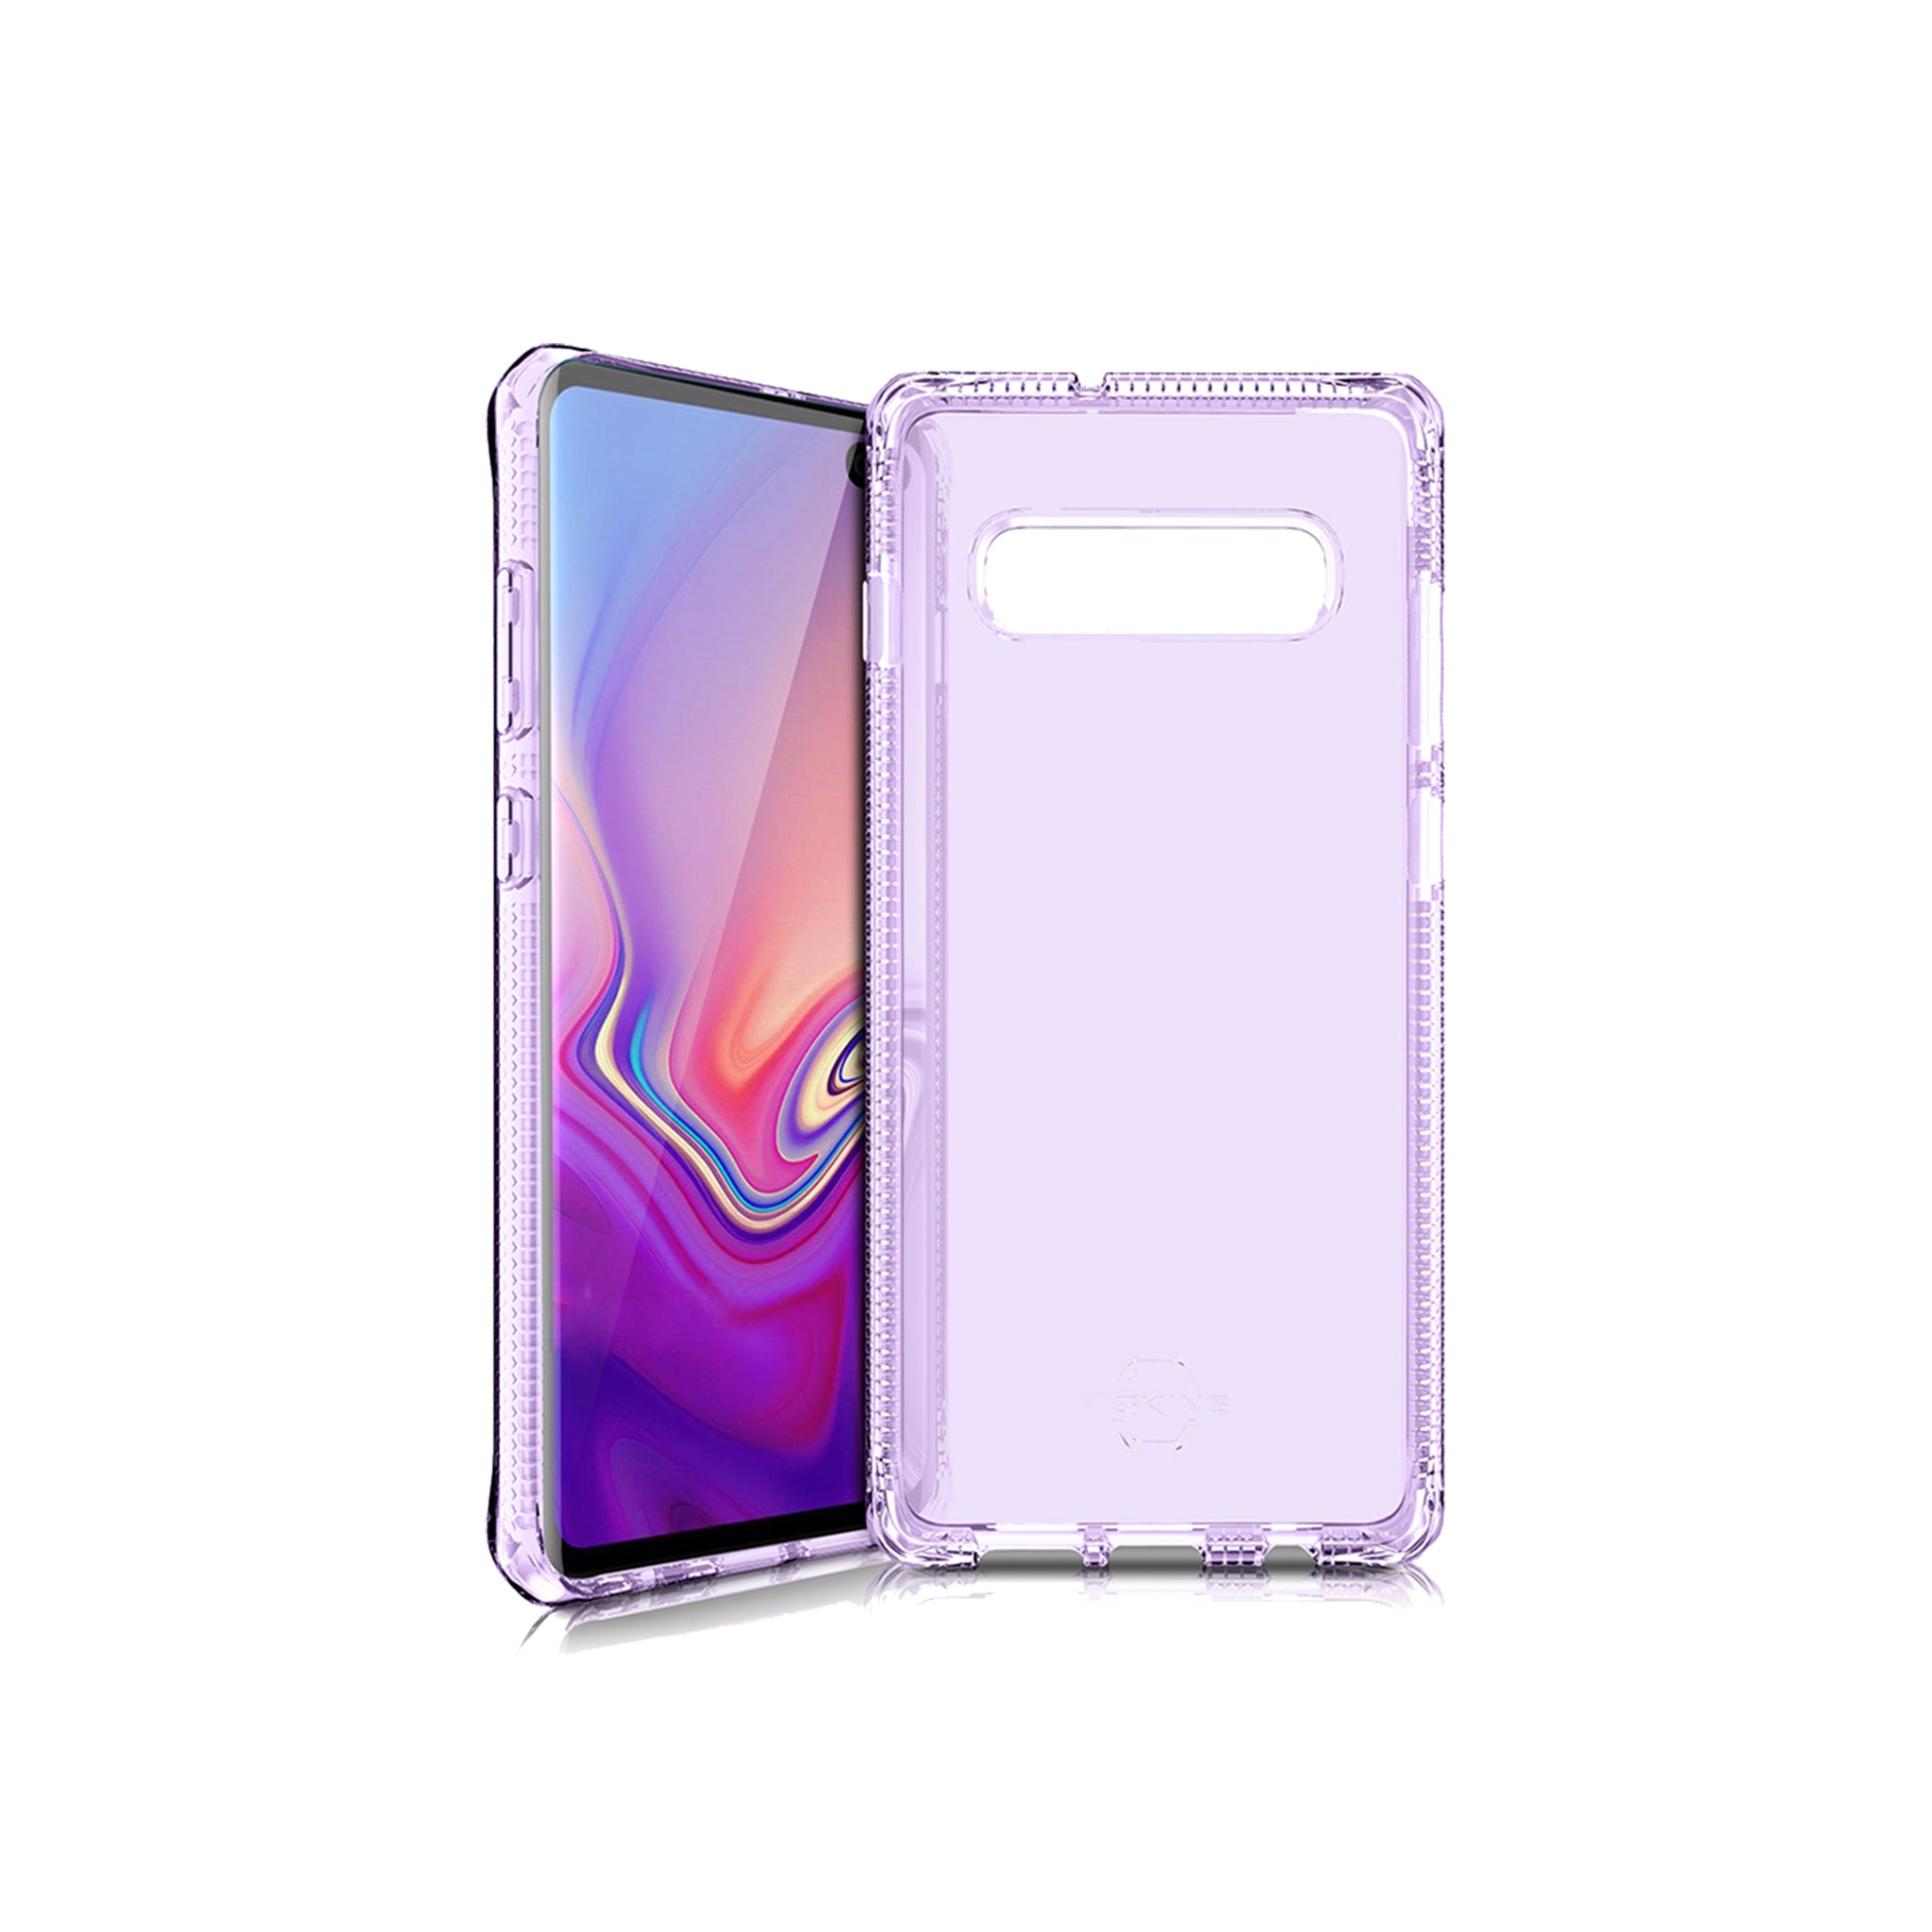 Itskins - Spectrum Clear Case For Samsung Galaxy S10 Plus - Purple